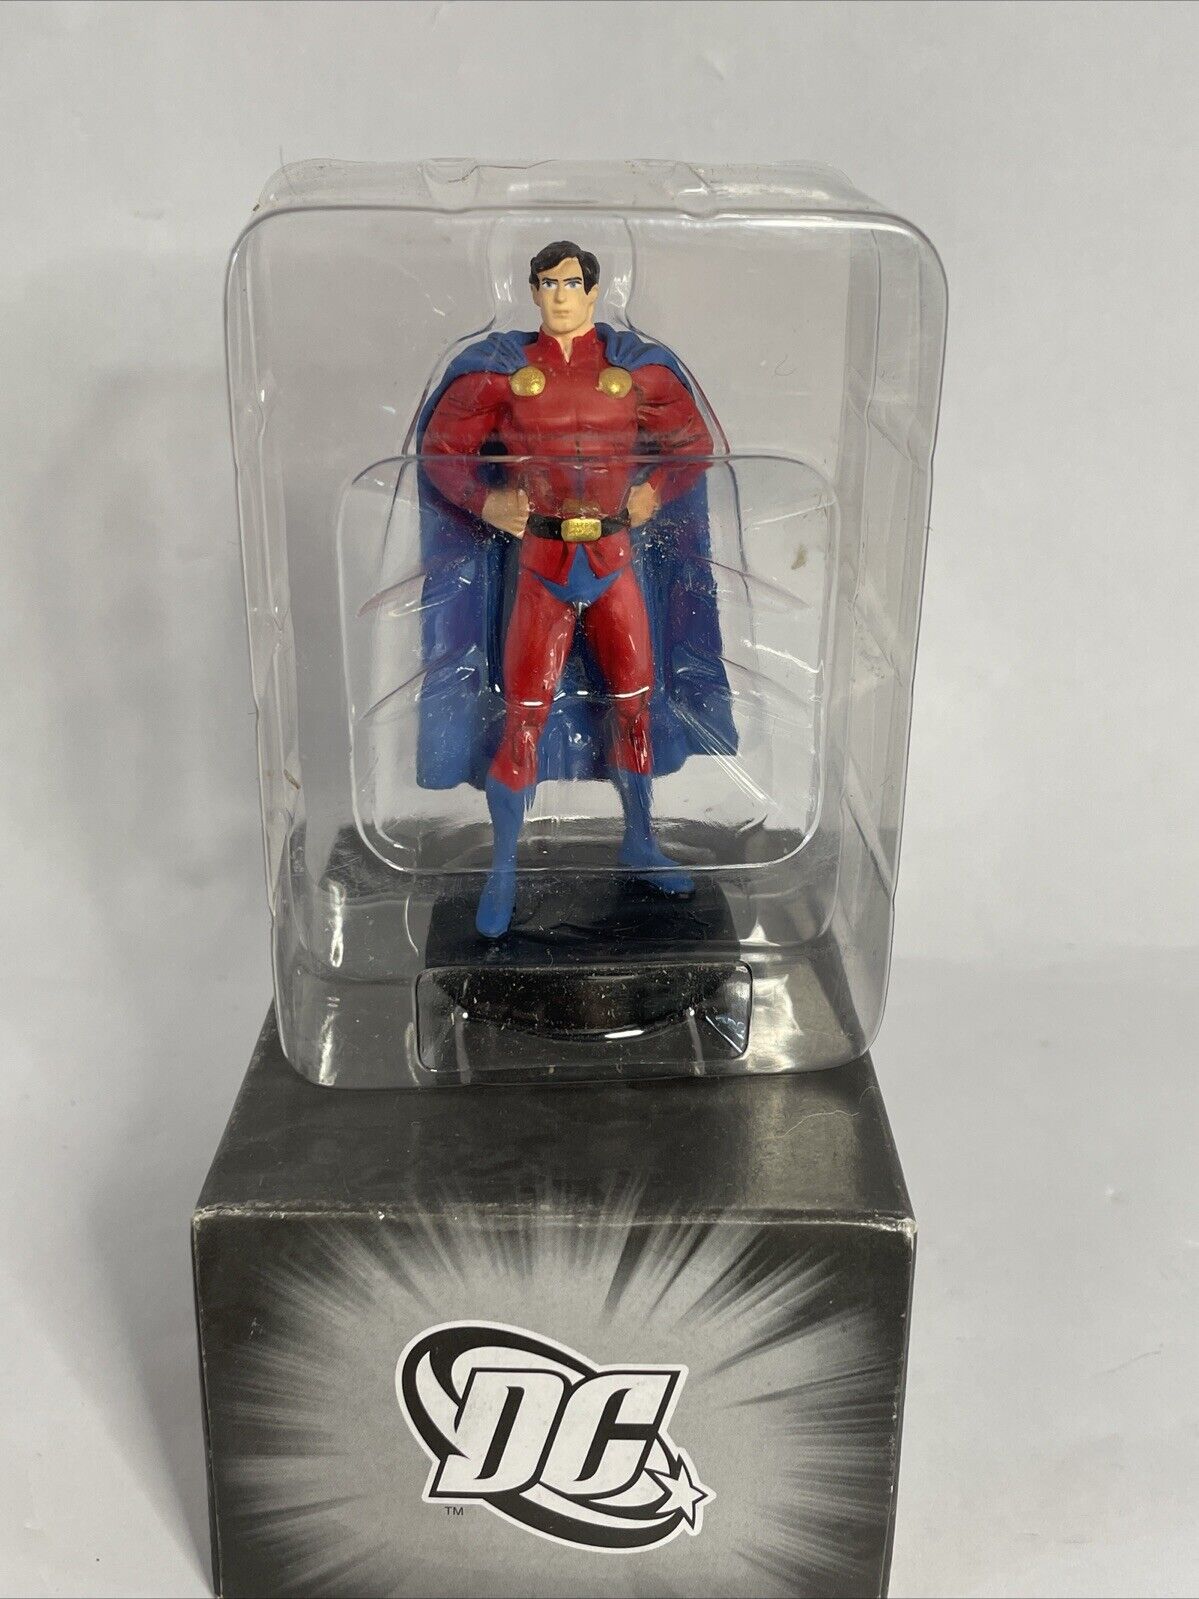 Mon-el | Eaglemoss DC Comics Super Hero Collection Lead Figurine Only